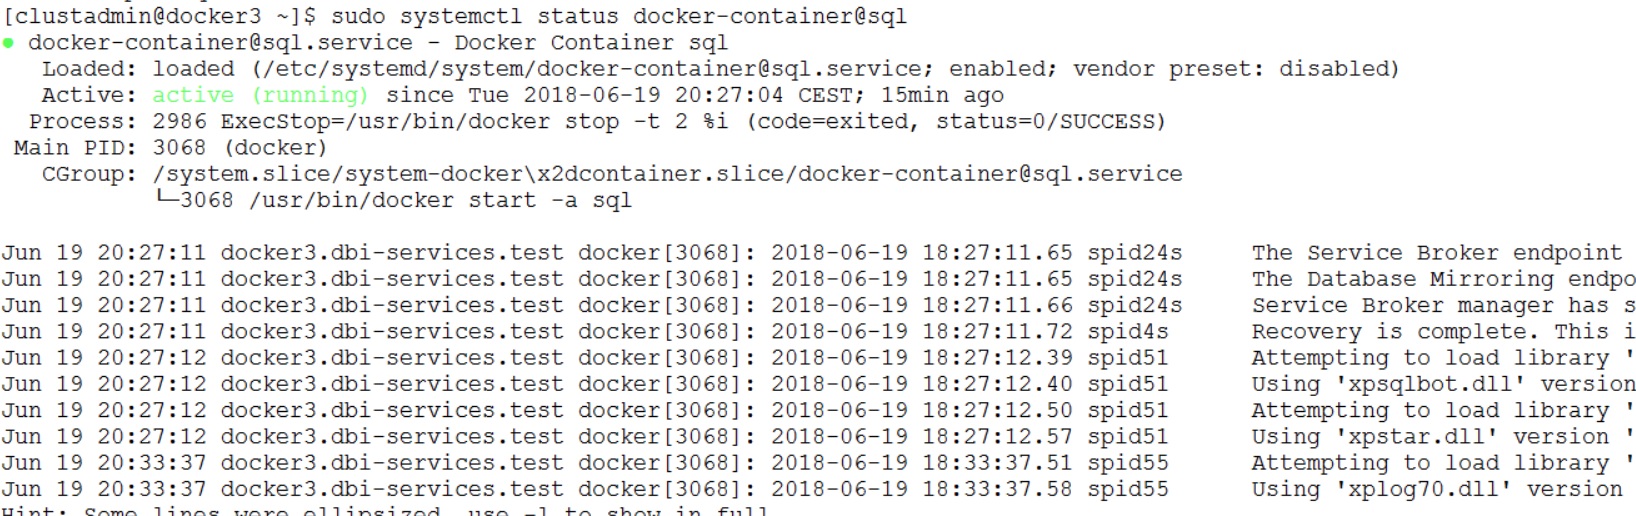 blog 139 - 1 - systemctl status docker container